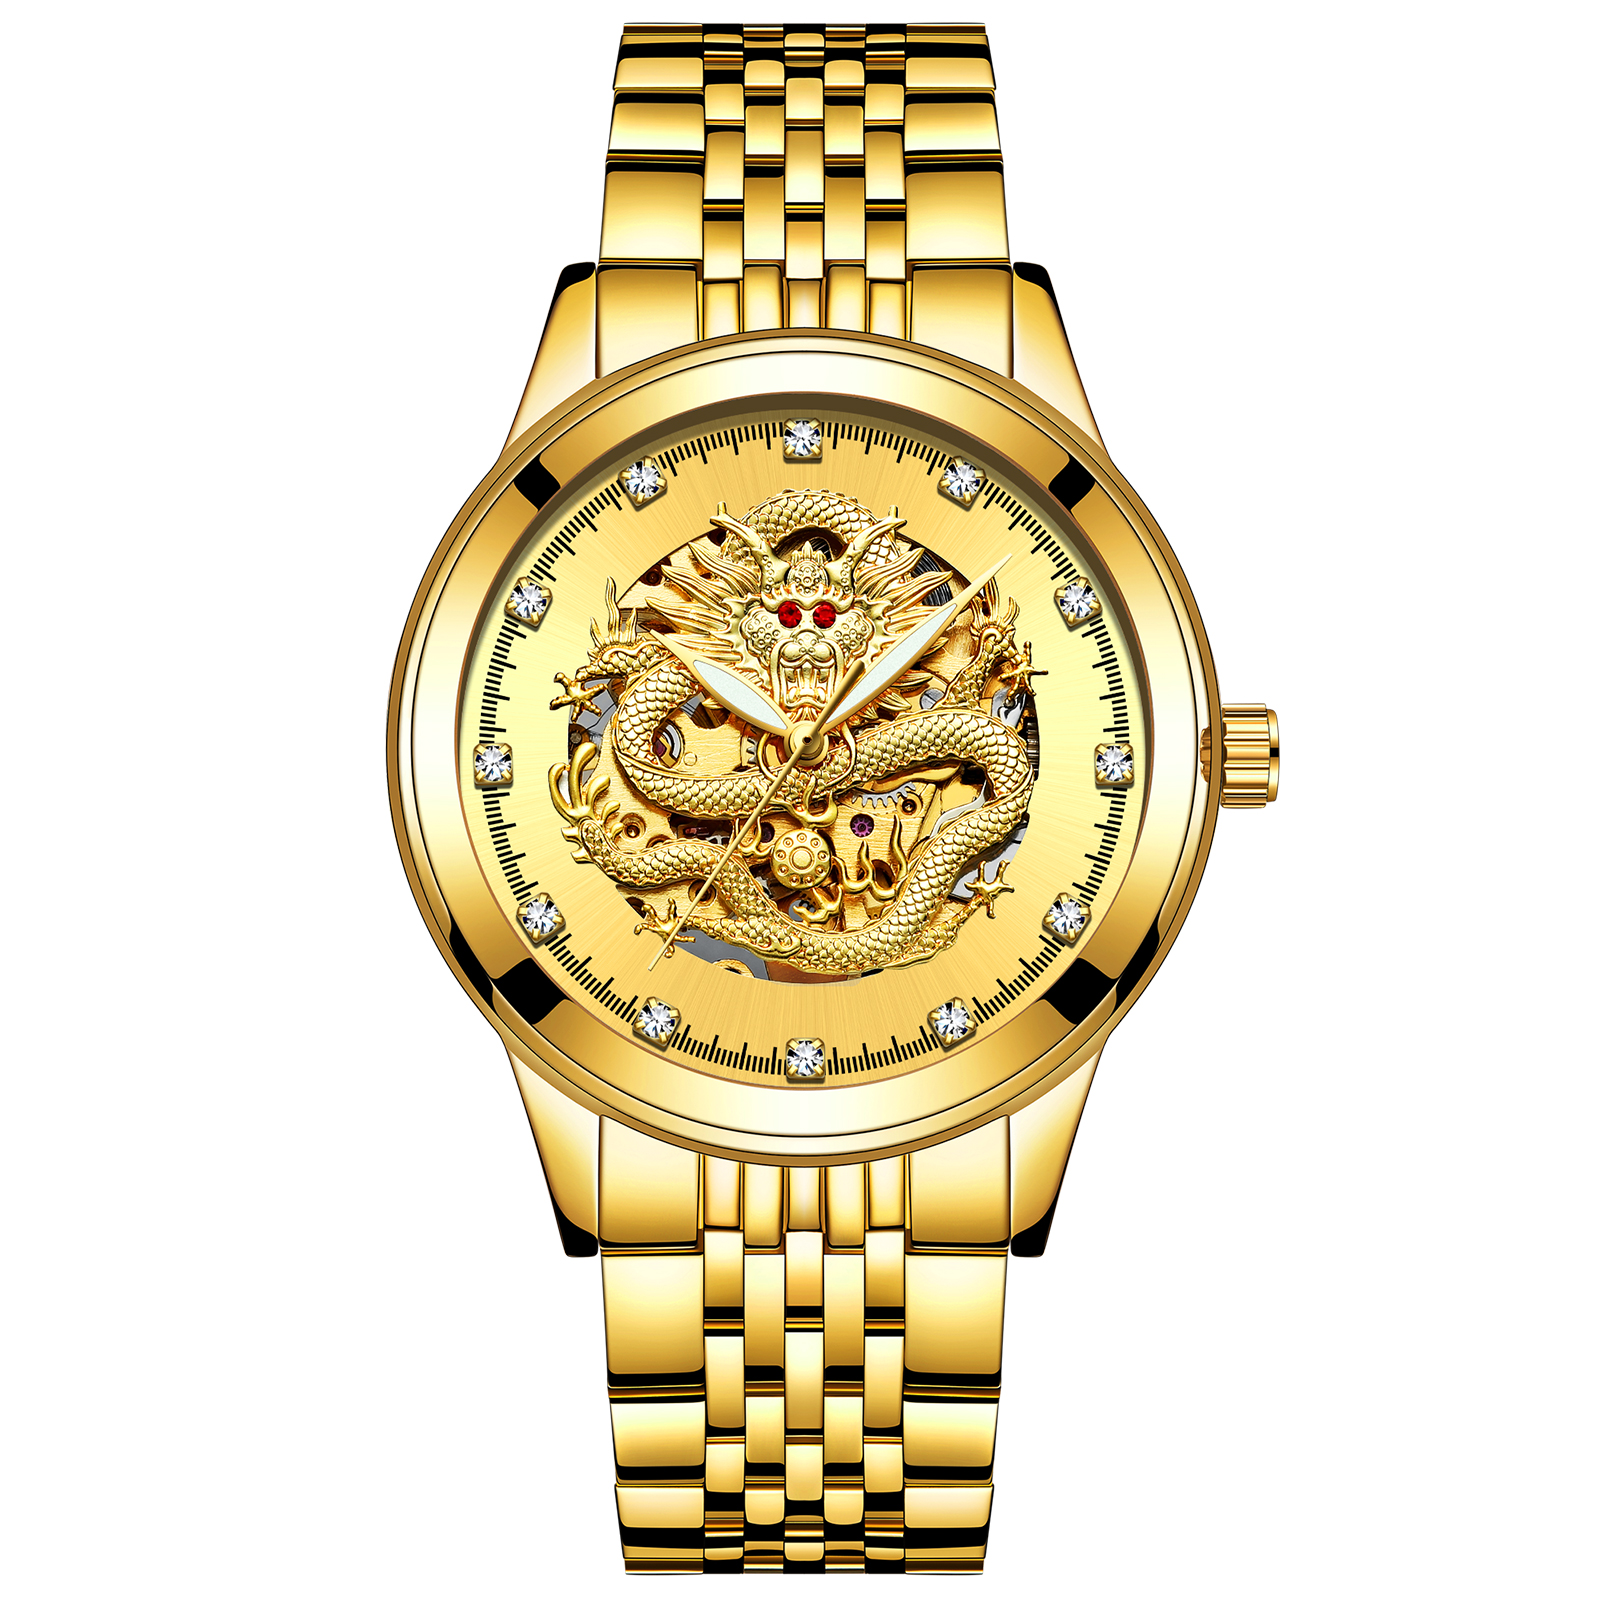 TEVISE 9006 B Dragon Watch Men automatic mechanical tourbillon watches fashion mens watches automatic self-wind Steel Wrist Watch